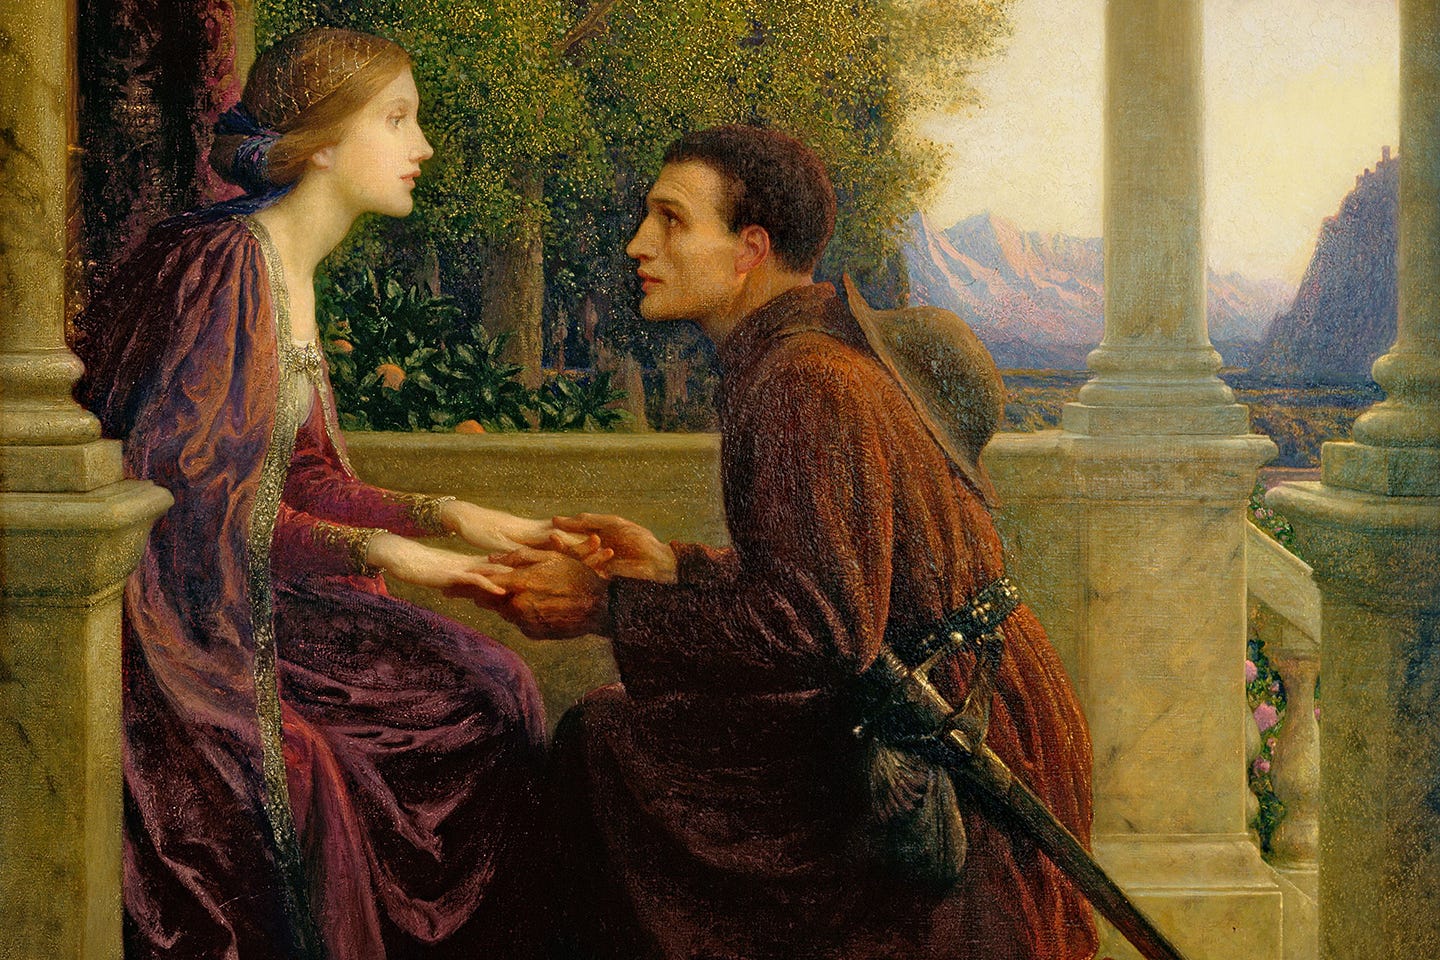 Romeo y Julieta: Deseo y tragedia